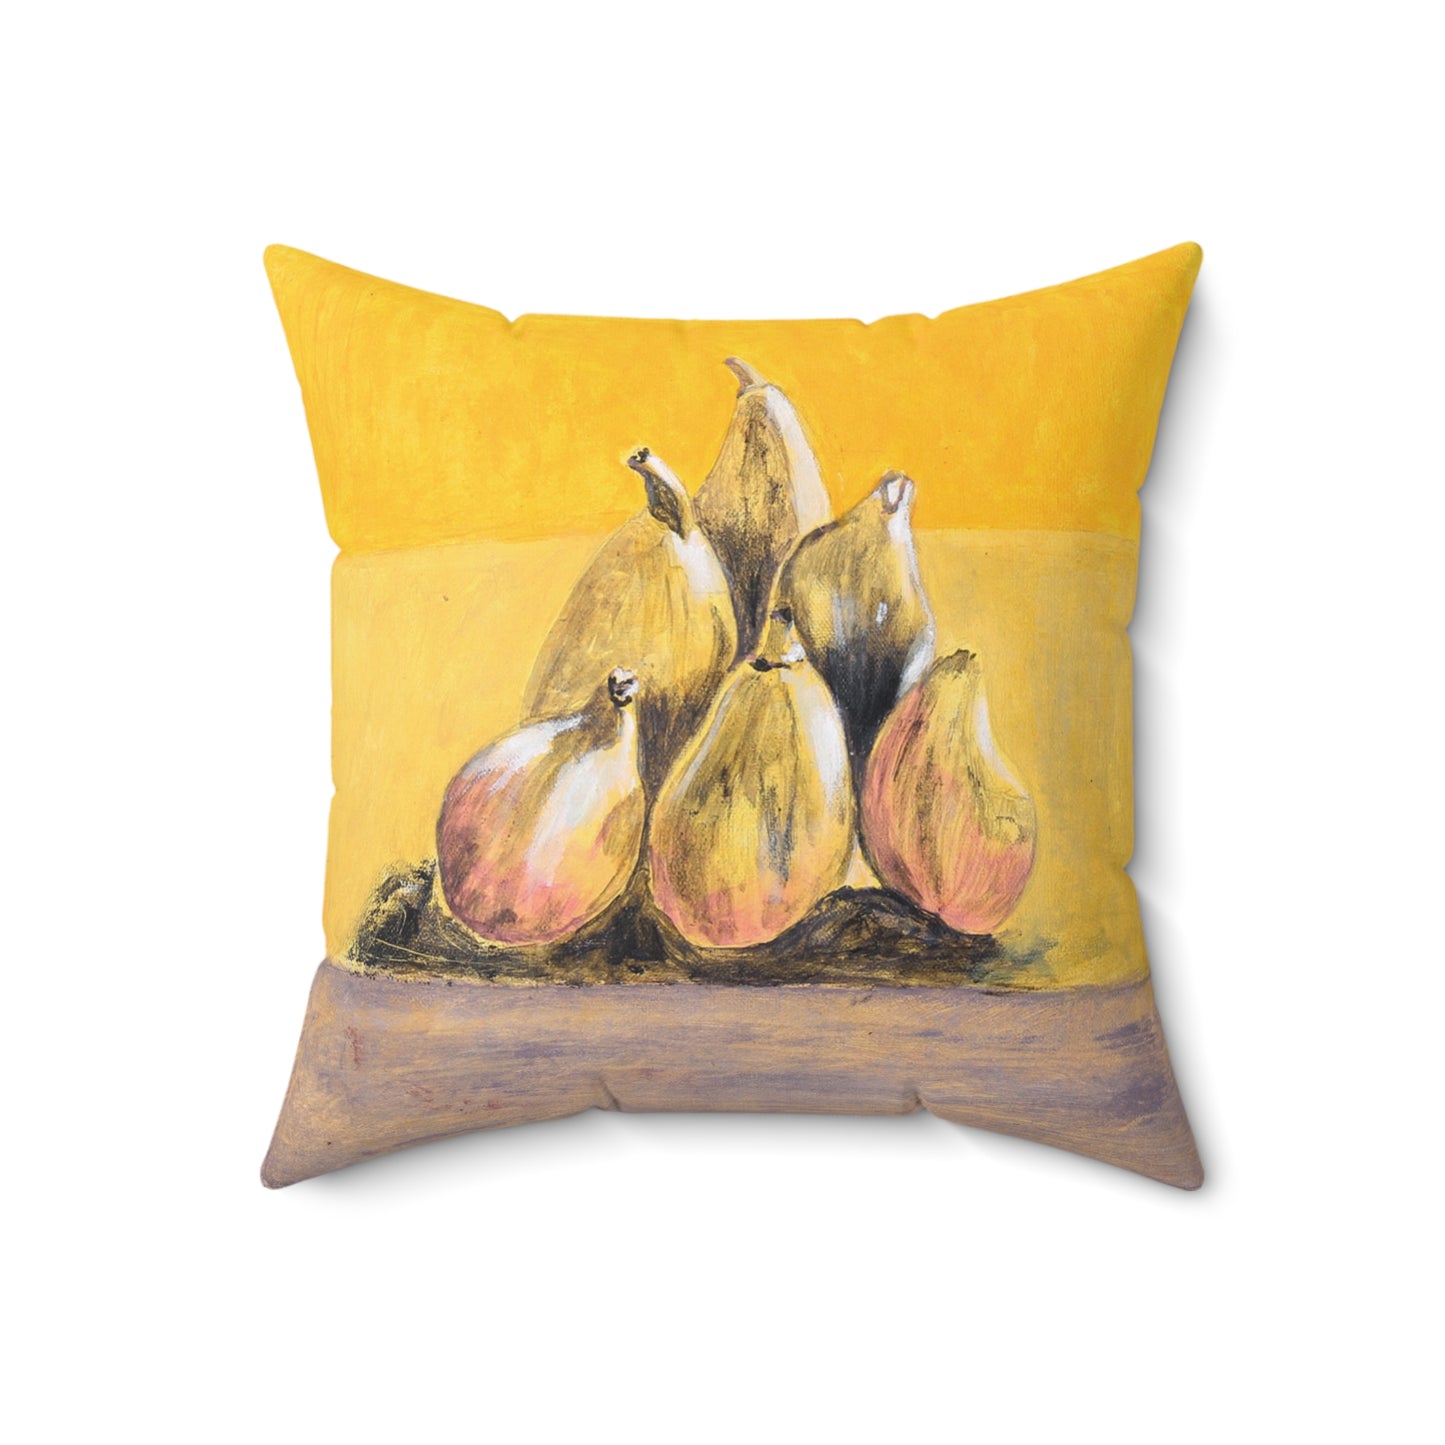 Yellow Figs, Pillow